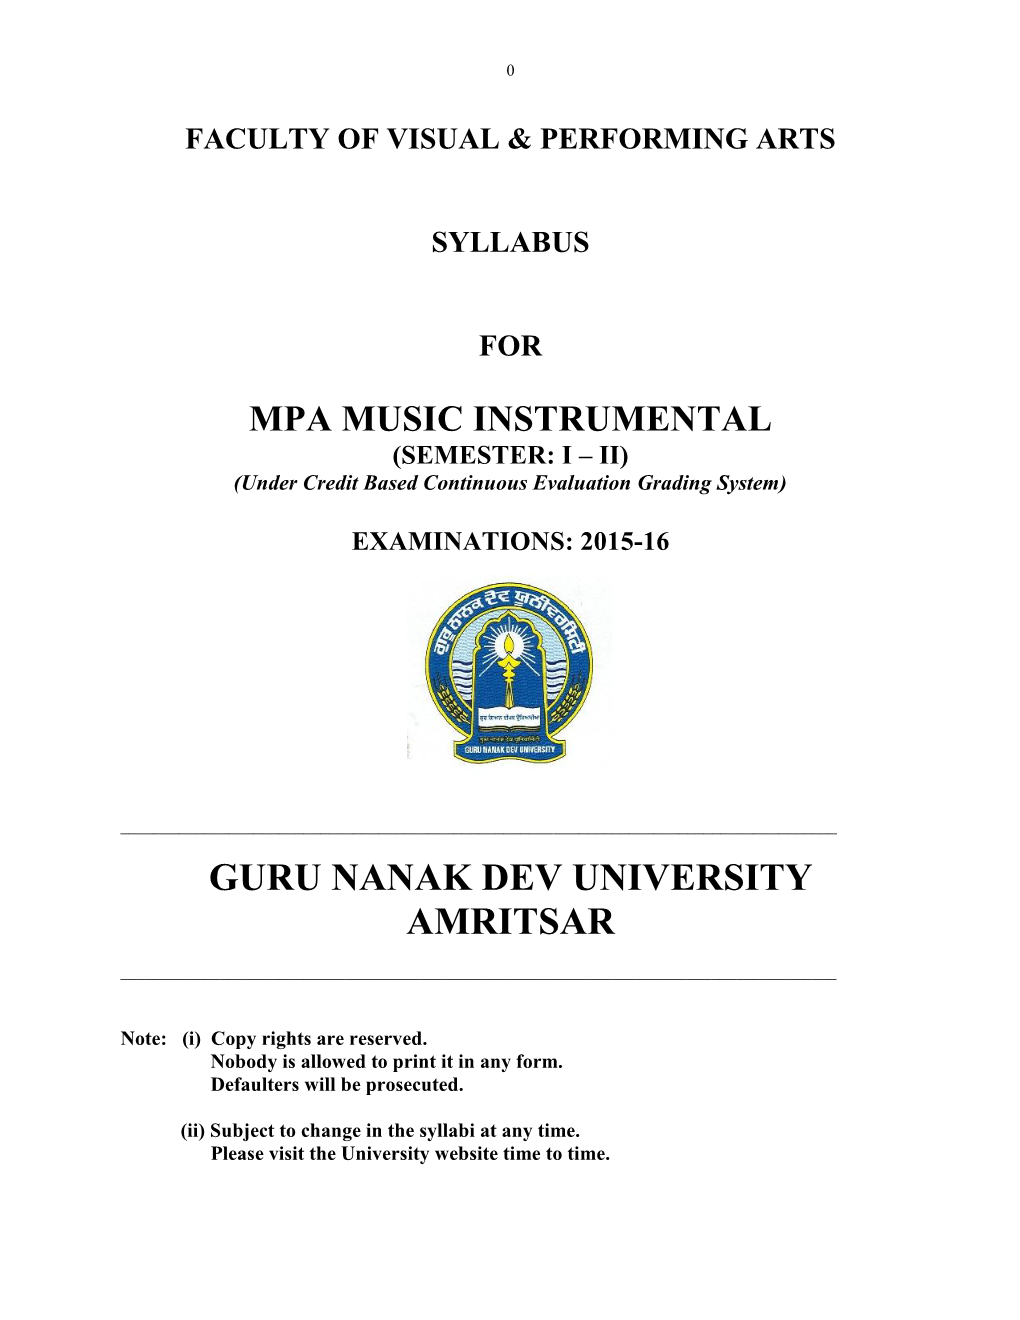 Faculty of Visual & Performing Arts Syllabus for Mpa Music Instrumental